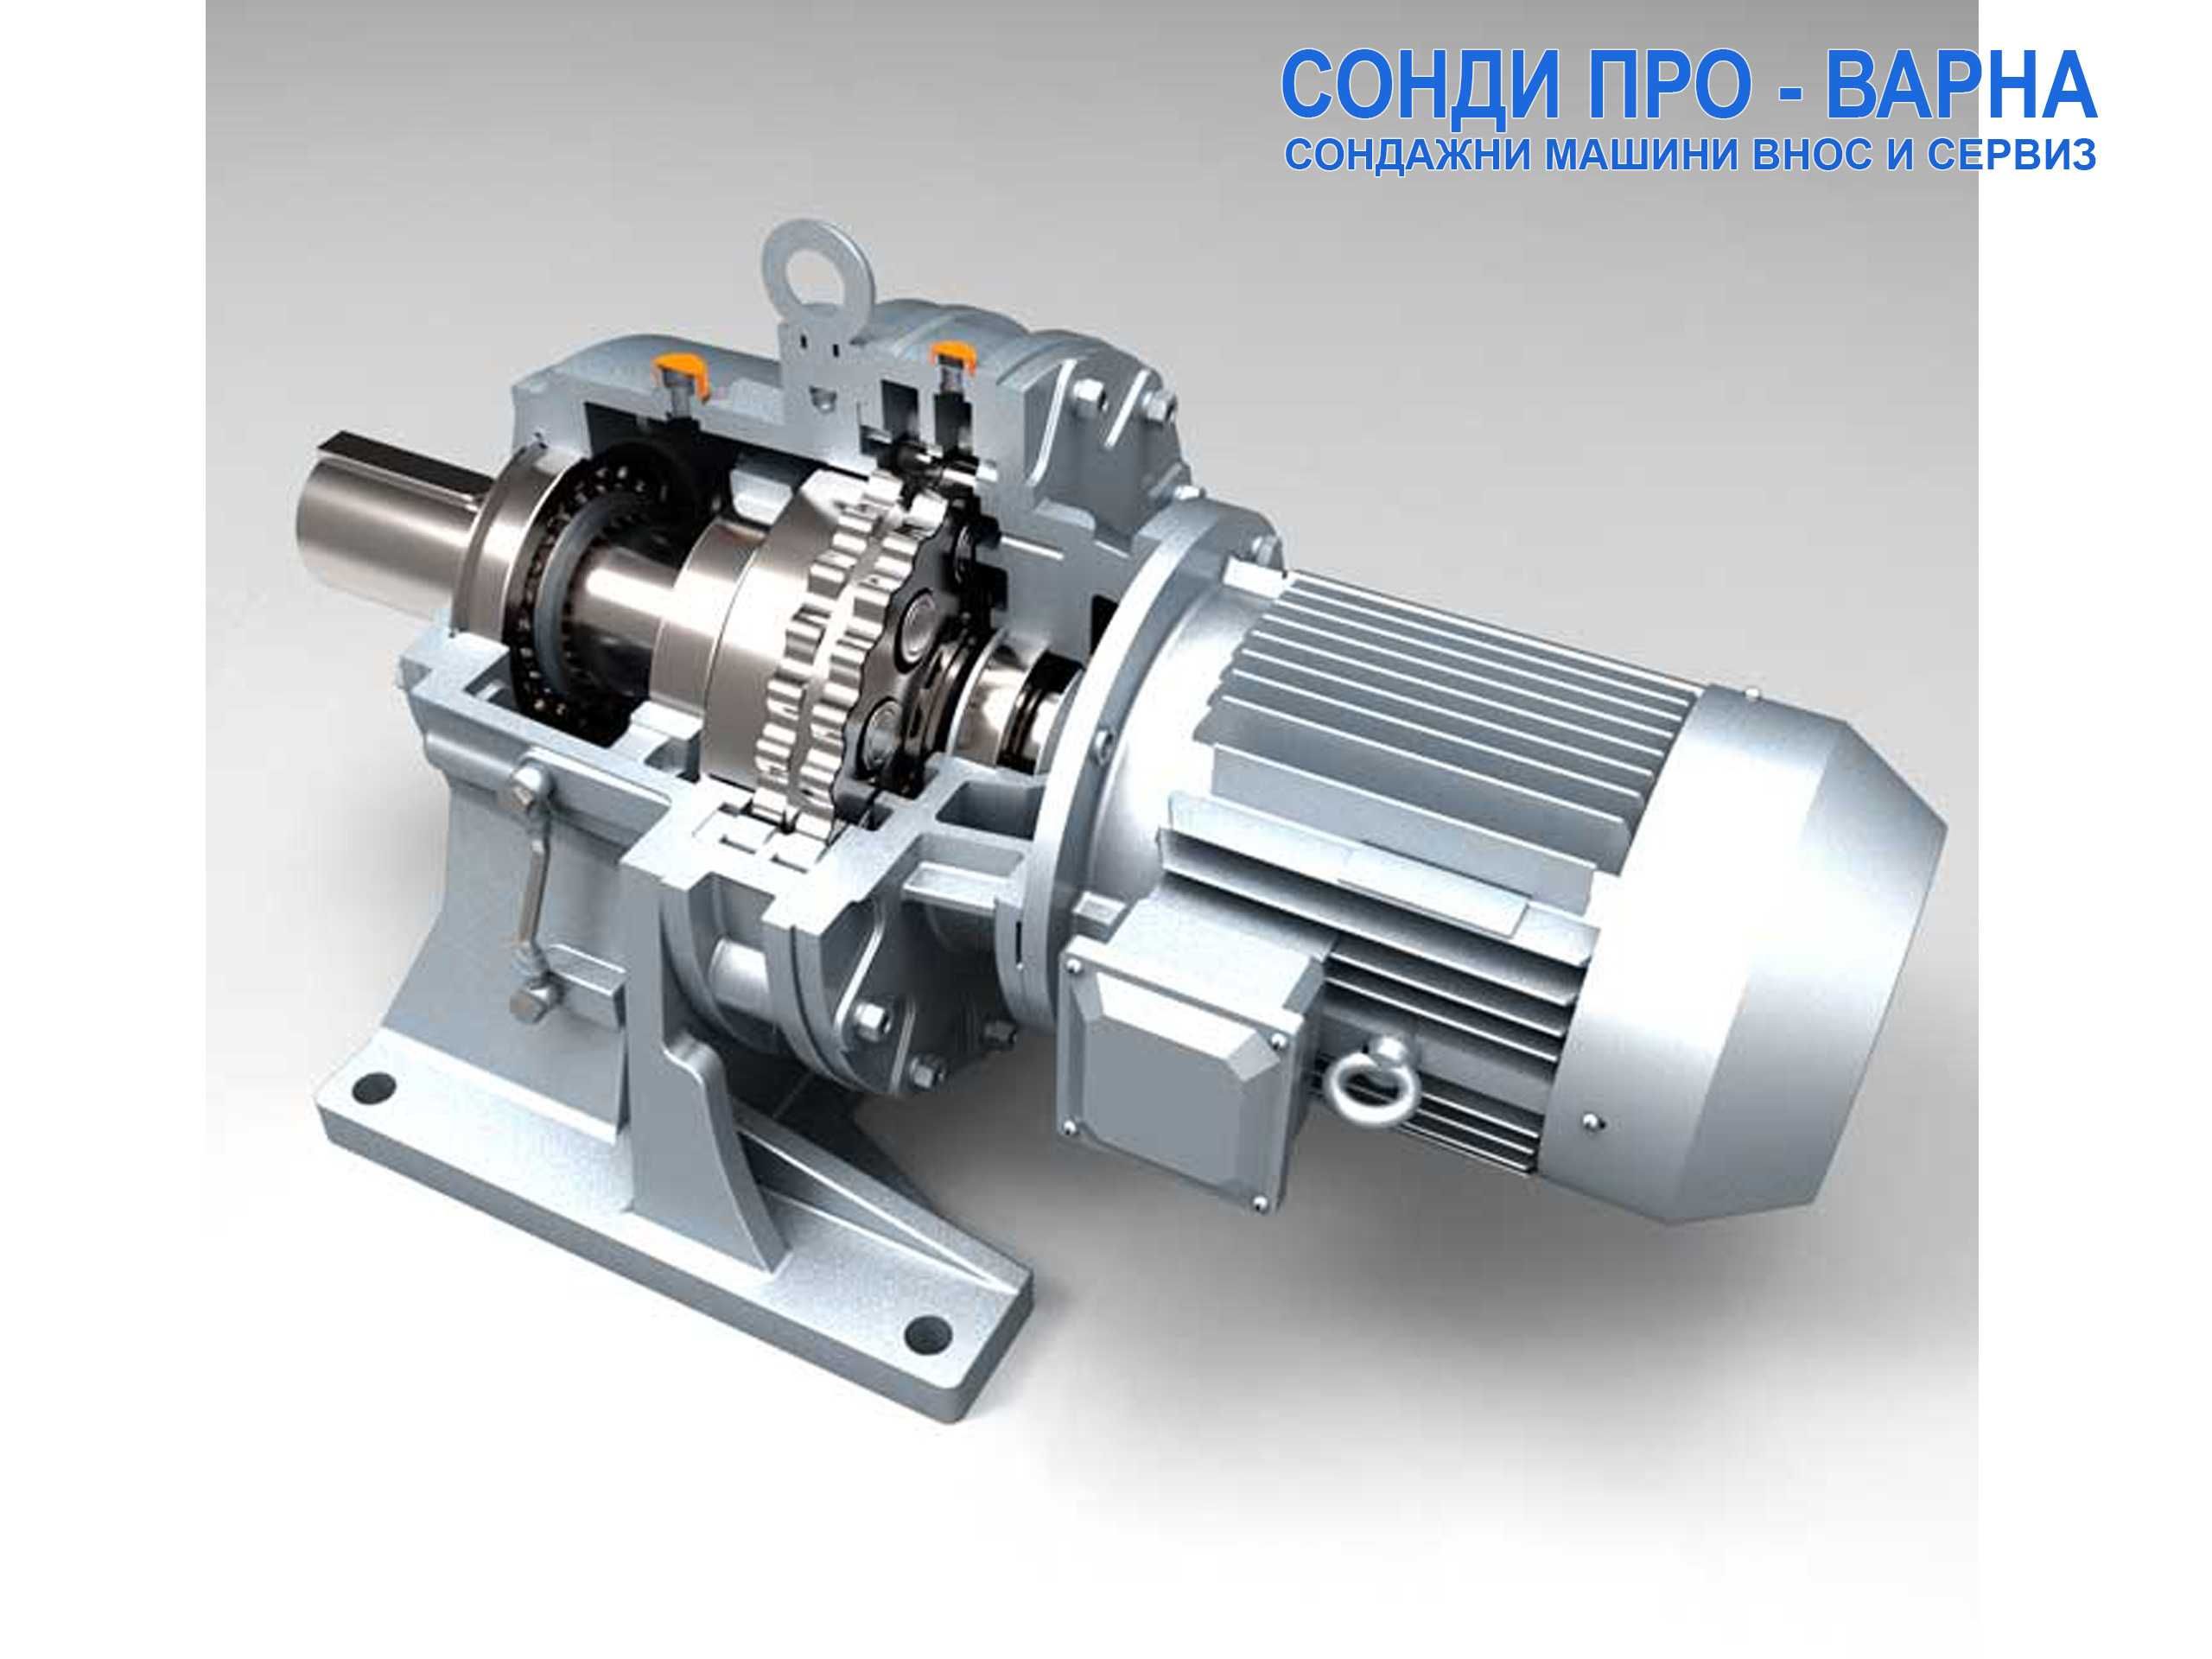 Нов Мотор Редуктор 1,5 KW за Сондажна машина /сонда за вода/ от Европа